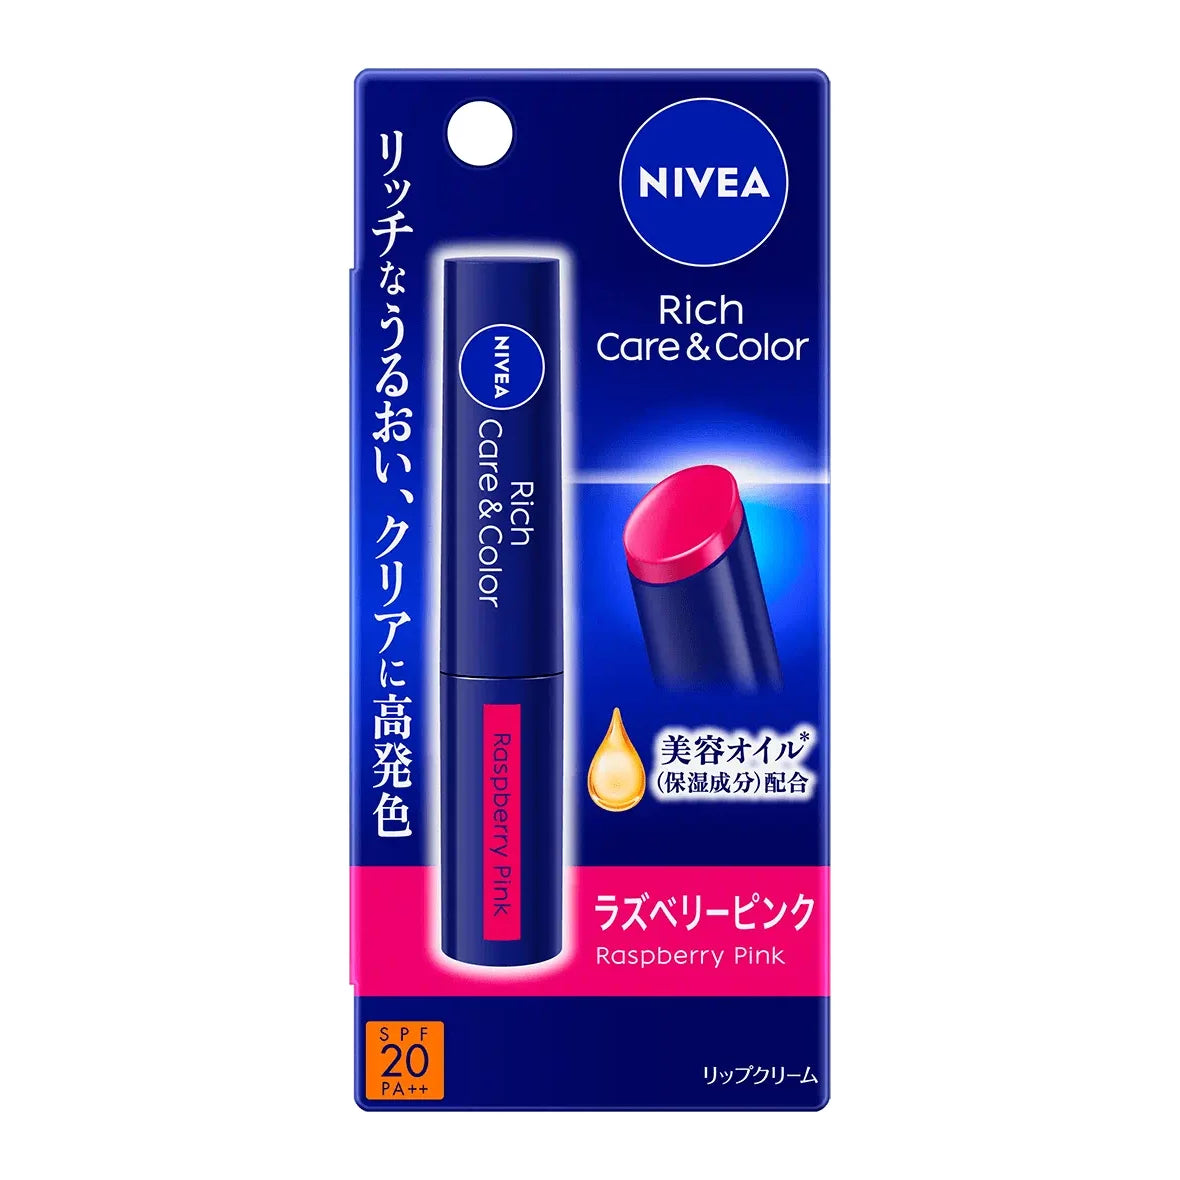 Nivea-Japan-Rich-Care-and-Color-Moisturizing-Tinted-Lip-Balm-2g-1-2024-06-14T06:54:55.290Z.webp